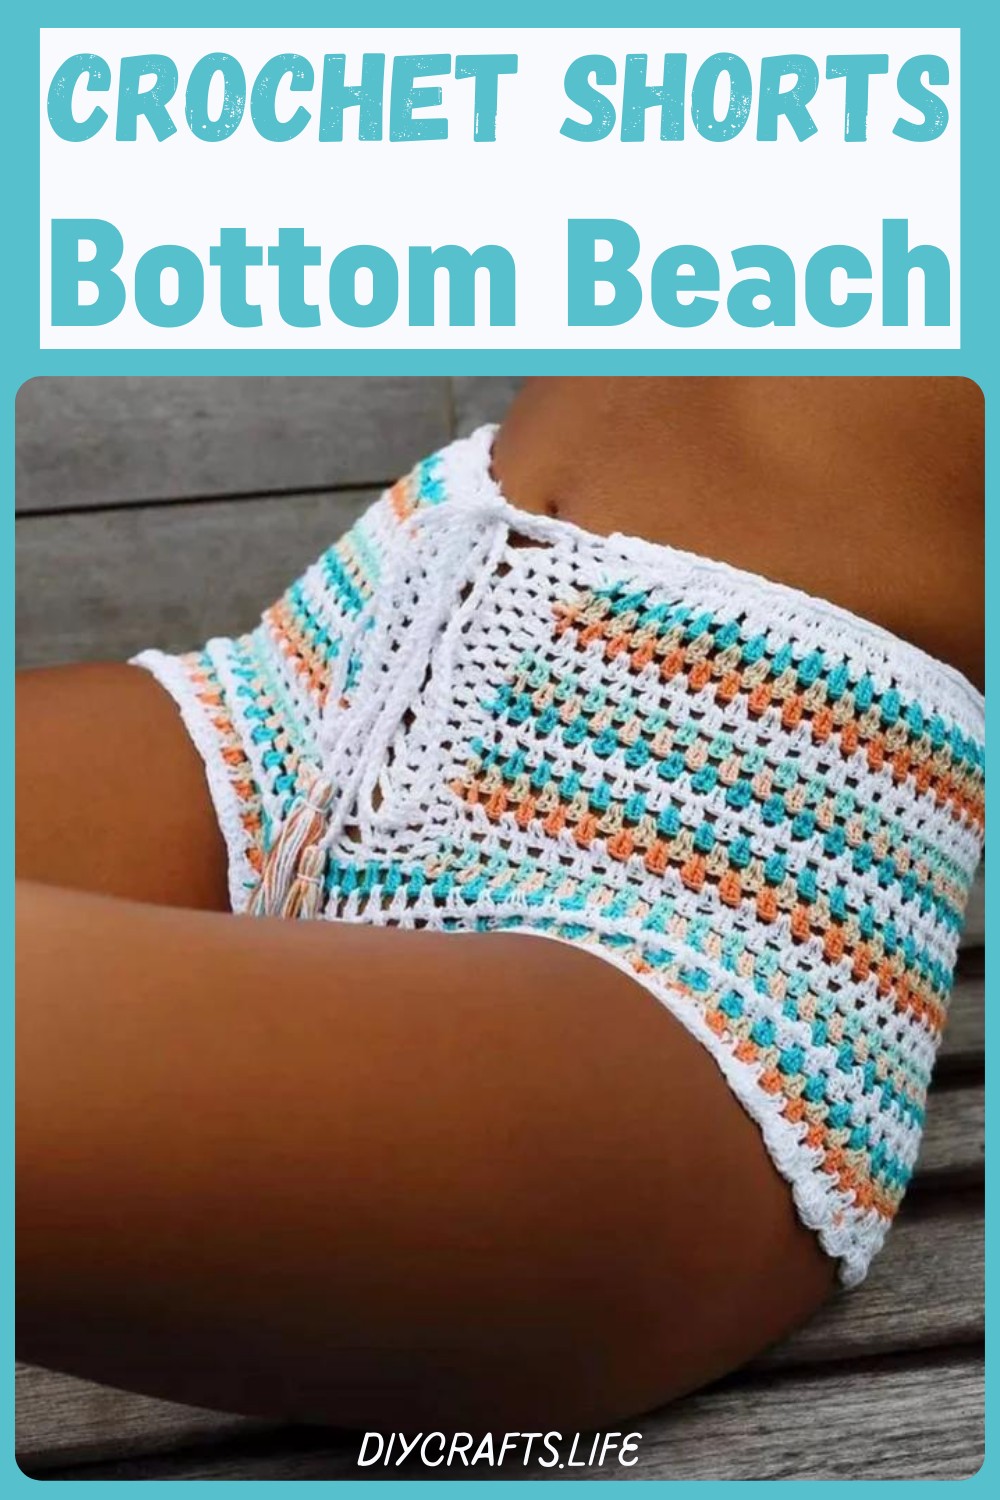 Crochet Shorts Bottom Beach